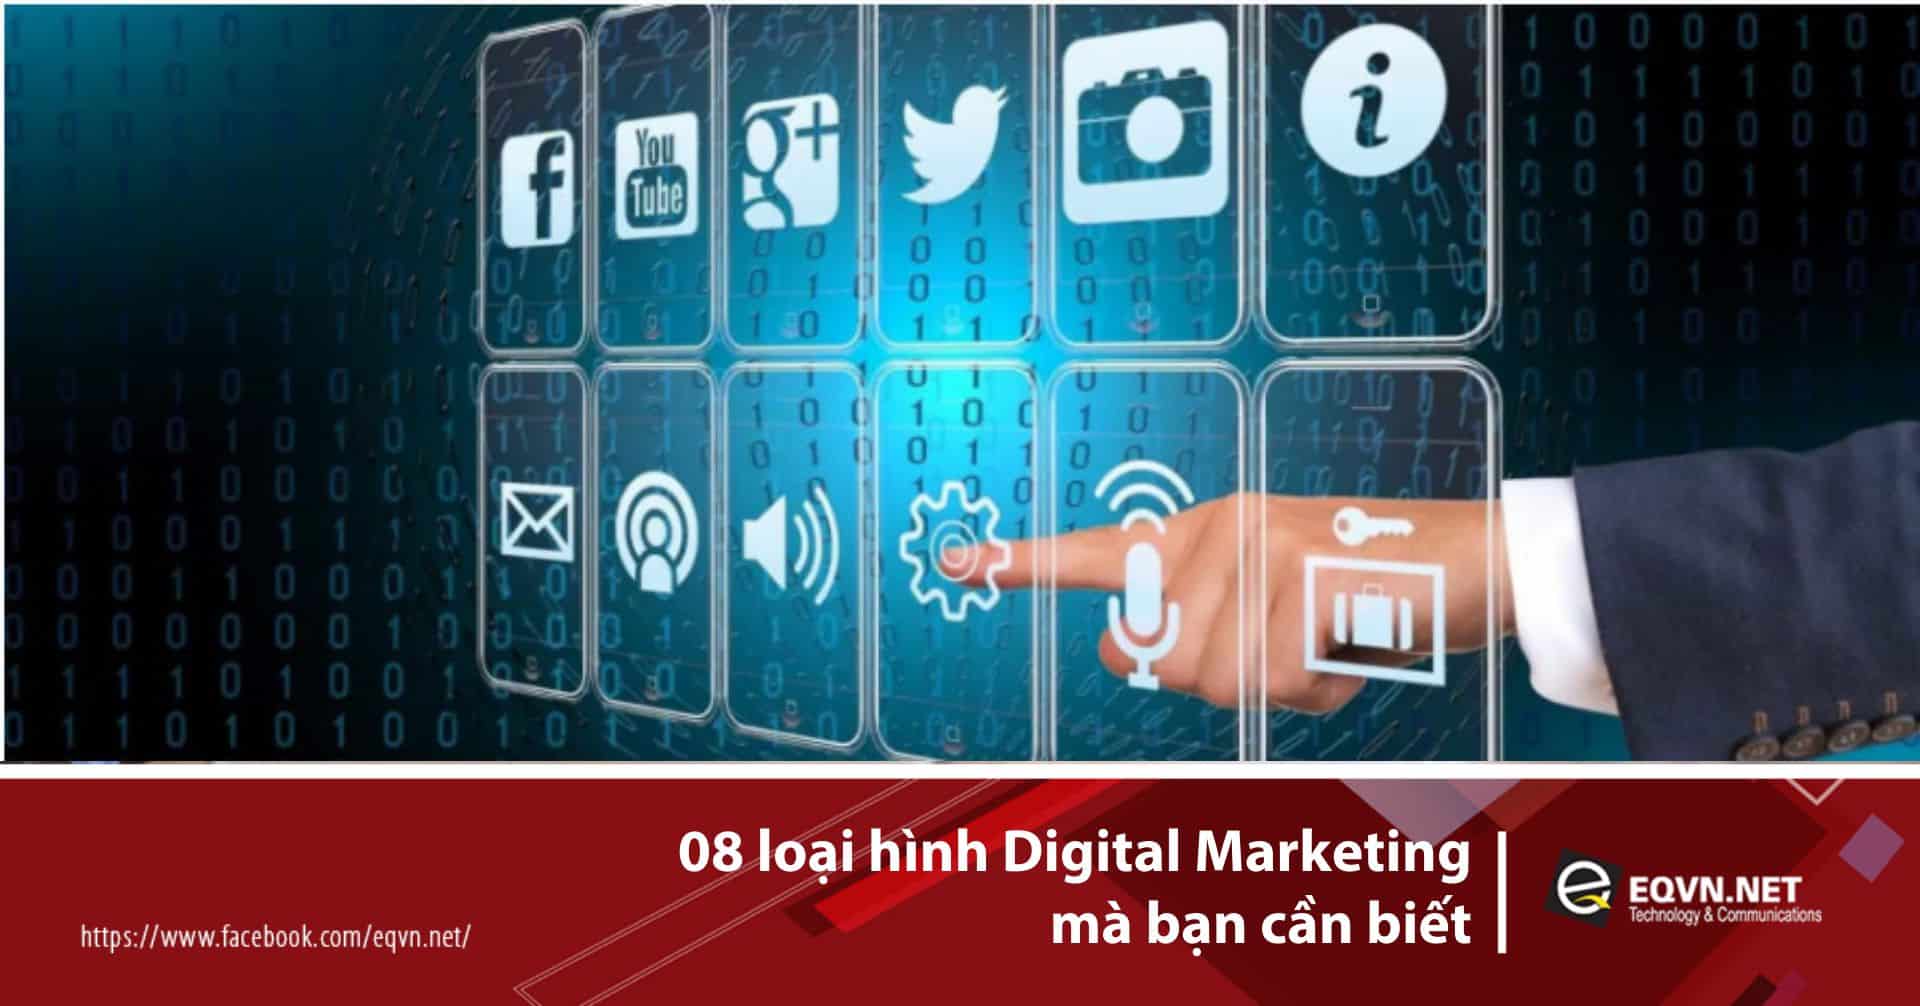 Công cụ Digital Marketing phổ biến